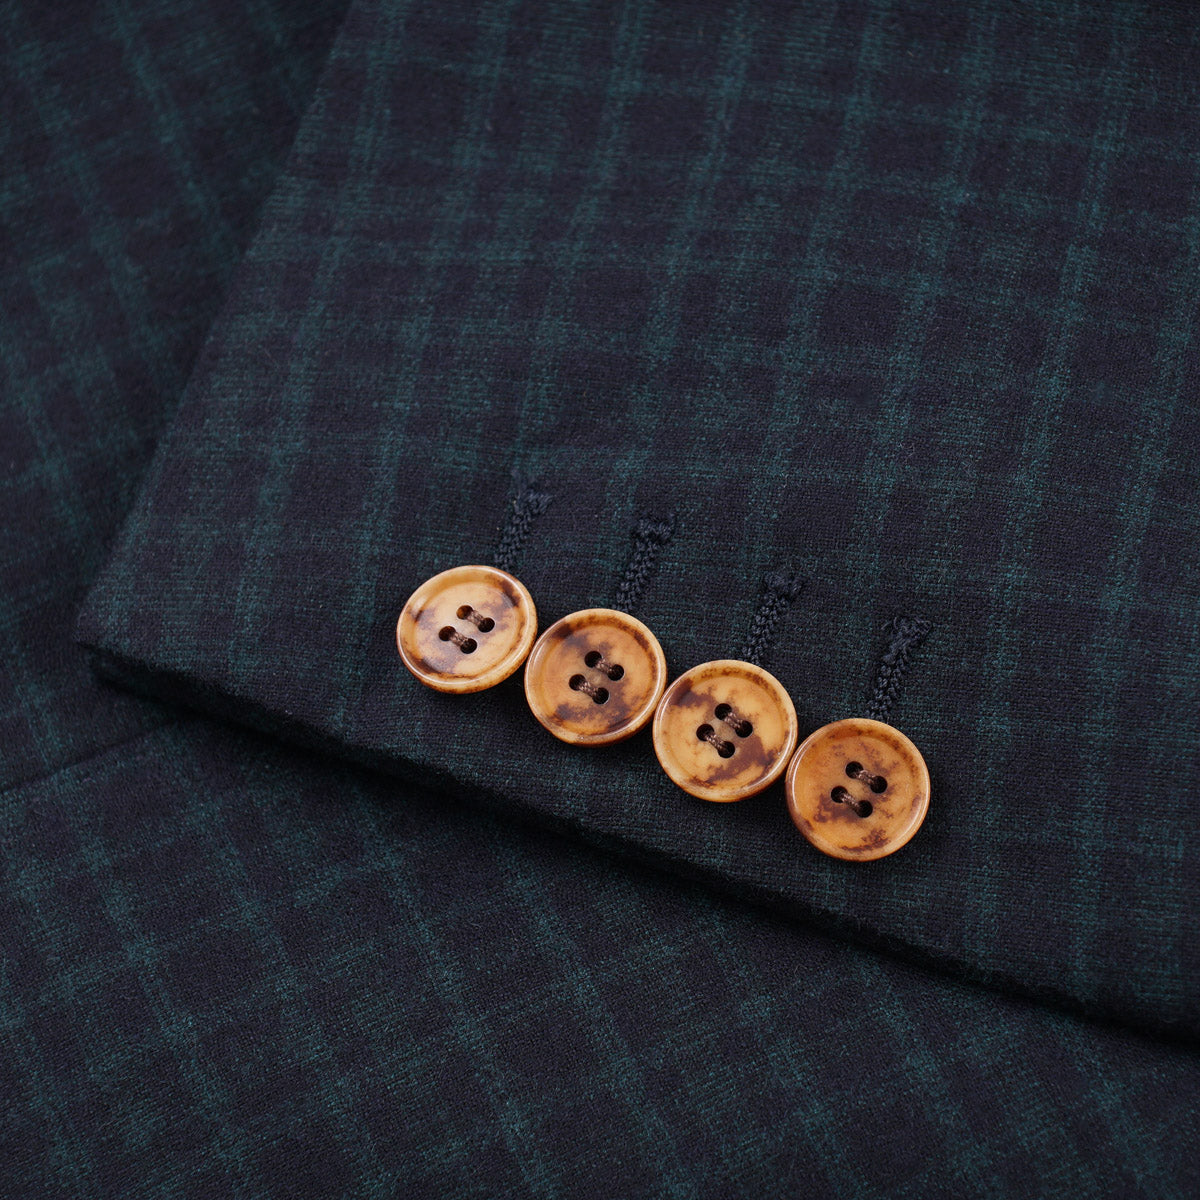 Sartorio Check Wool Suit with Peak Lapels - Top Shelf Apparel